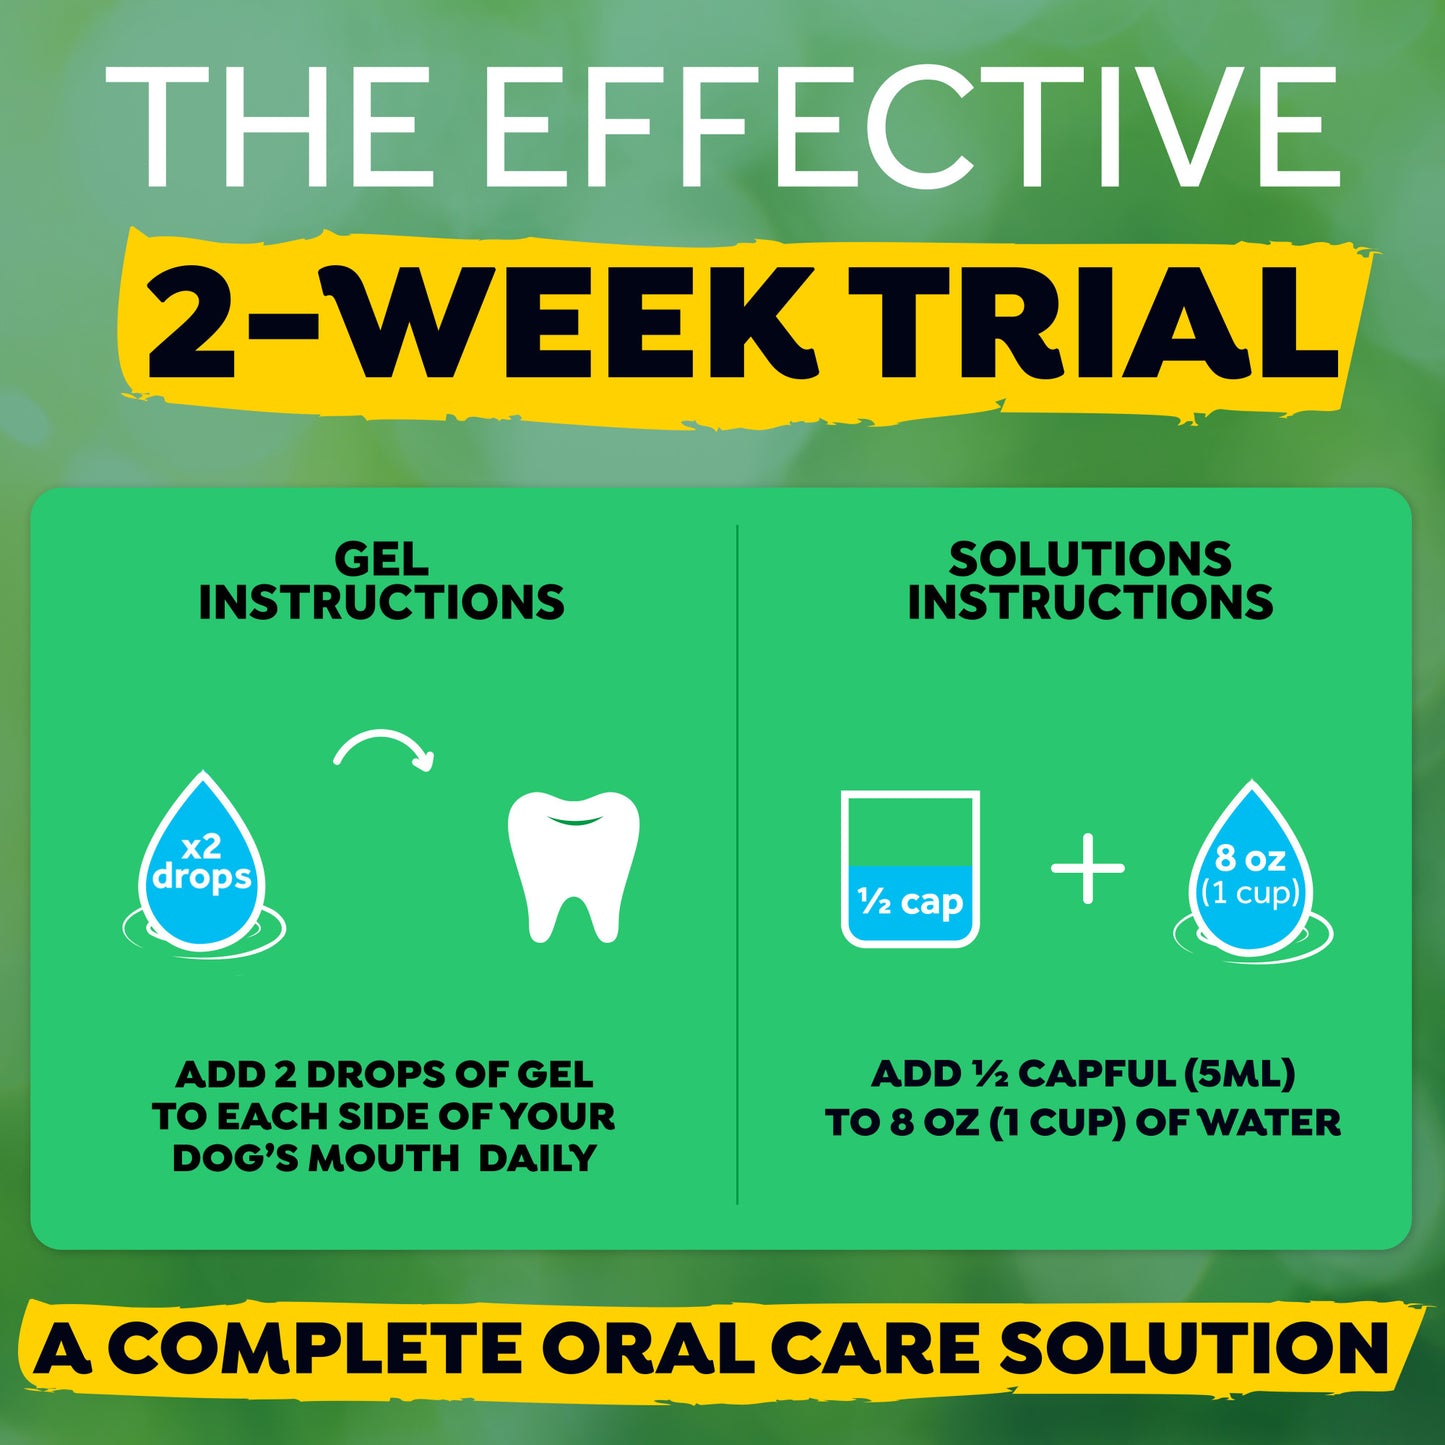 Tropiclean Fresh Breath Dental Trial Kit (2-Week Supply)